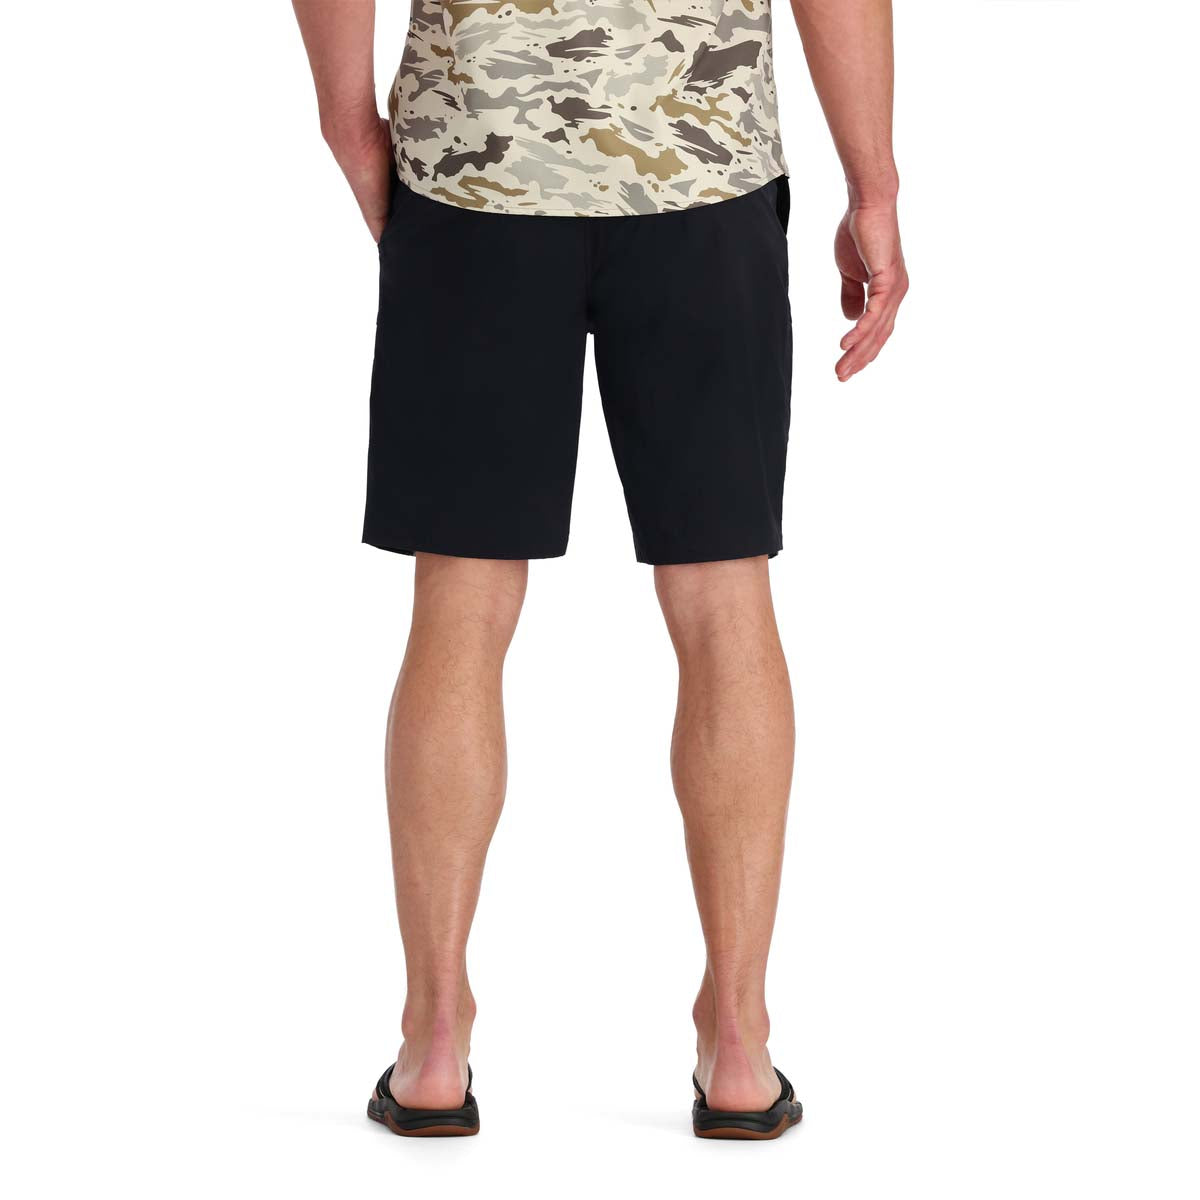 Men's Shorts for sale in Mount Vernon, Texas